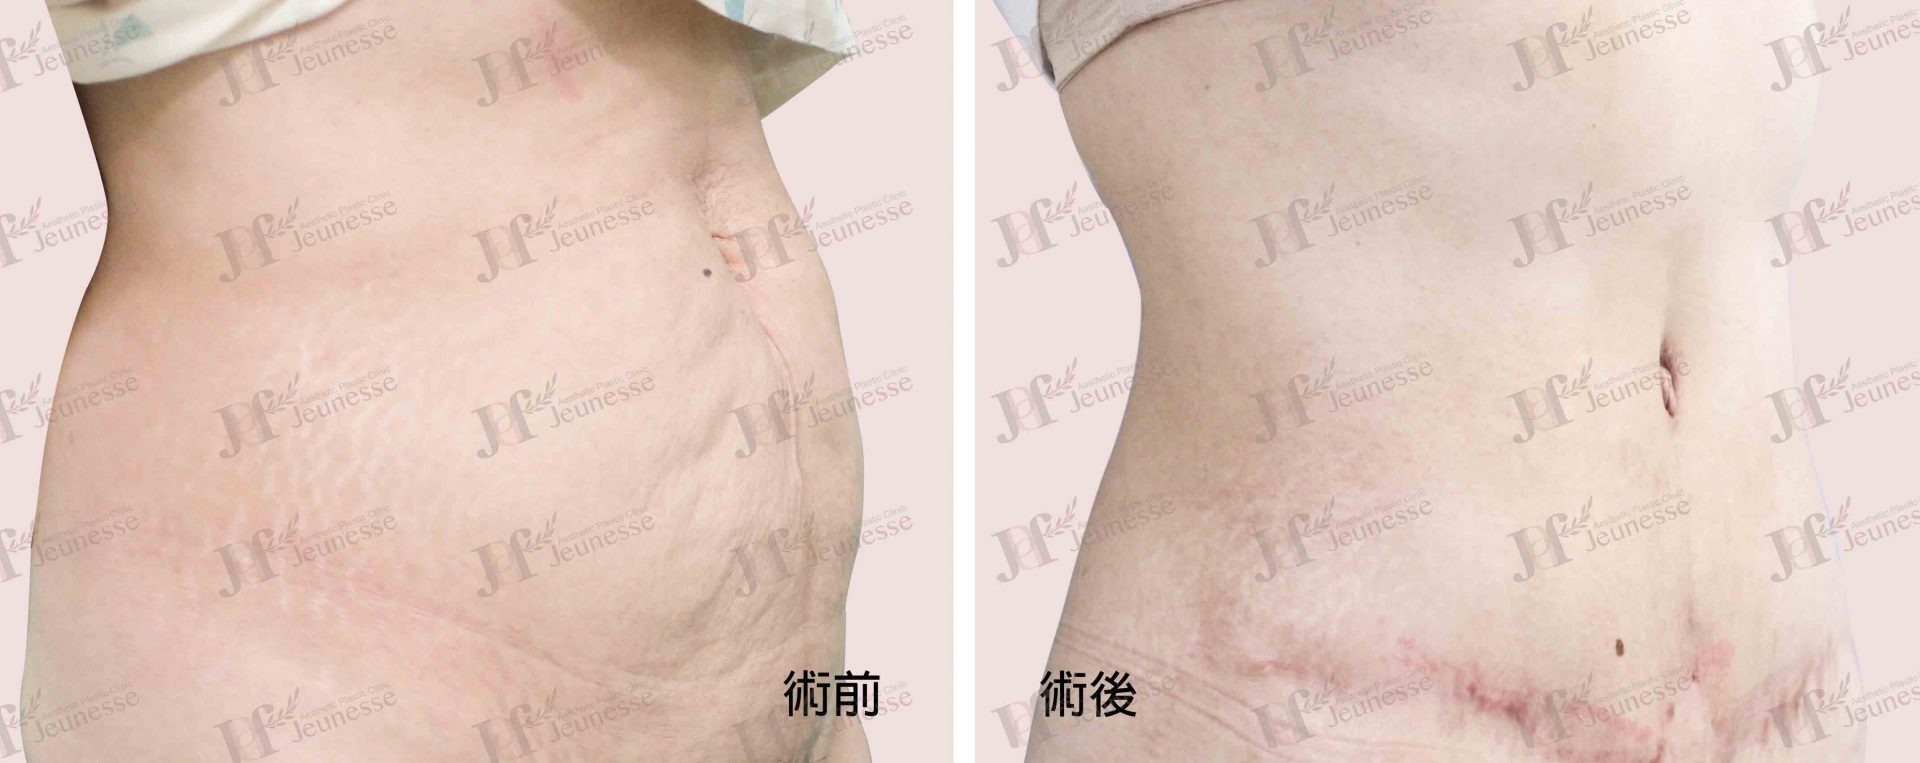 Abdominoplasty腹部成形術及抽脂手術 case 1 45度-浮水印